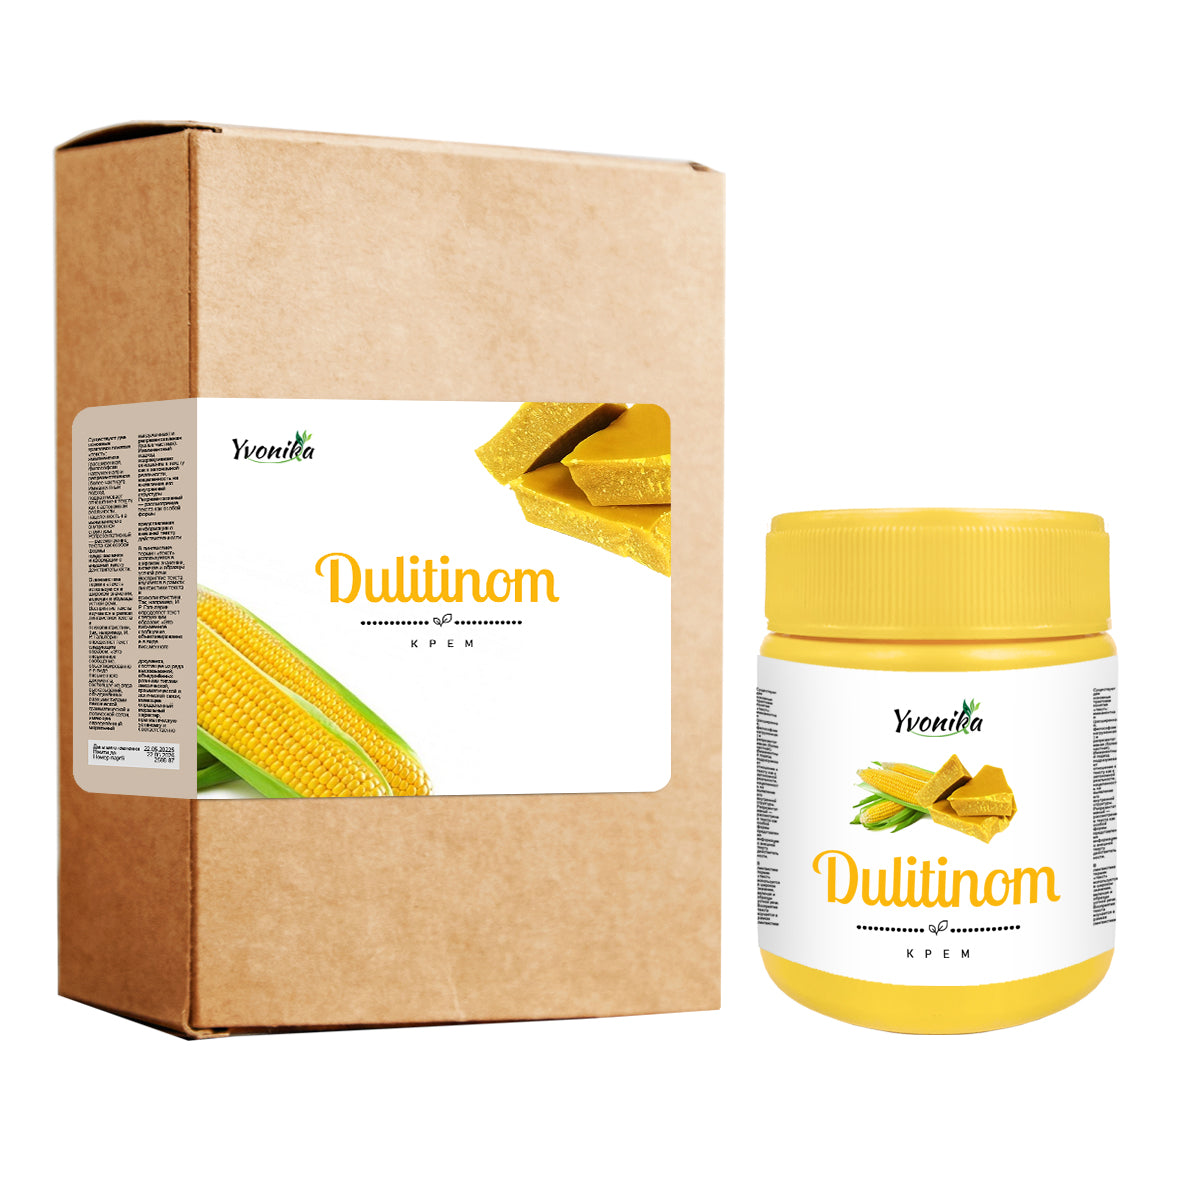 Dulitinom (Dulitinom) cream wax for sciatica pain, Yvonika supplements (Standardized Extract), 30g